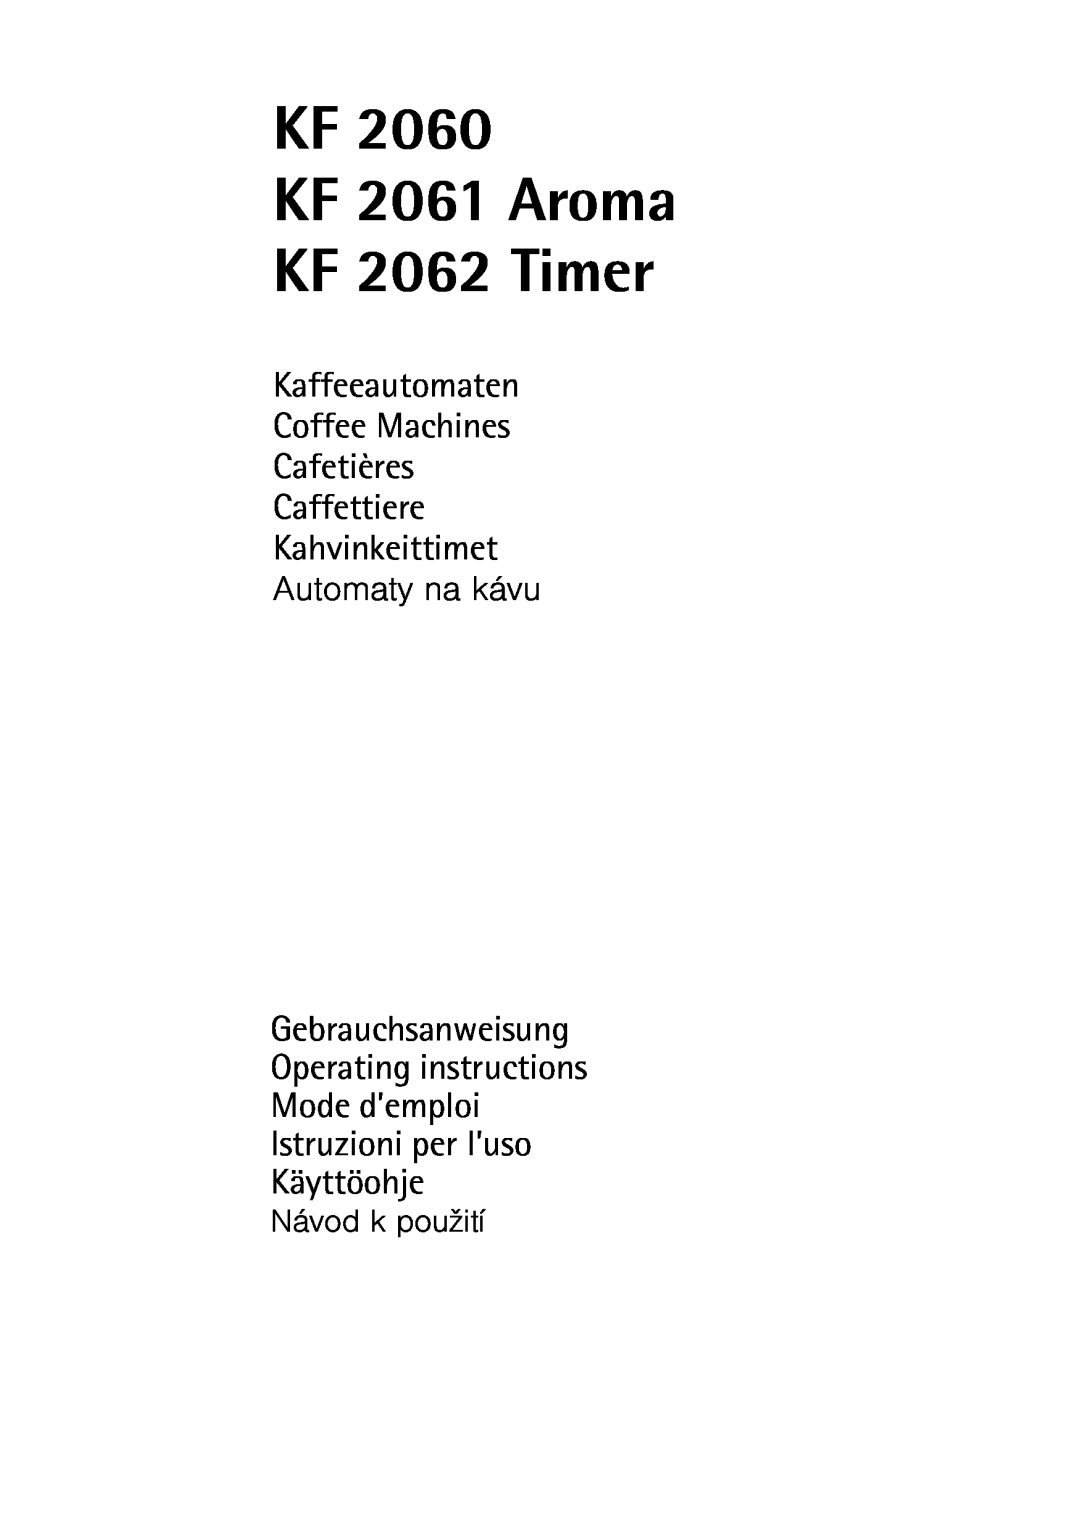 AEG KF 2060 manual KF KF 2061 Aroma KF 2062 Timer, Kaffeeautomaten Coffee Machines Cafetières, Návod k použití 